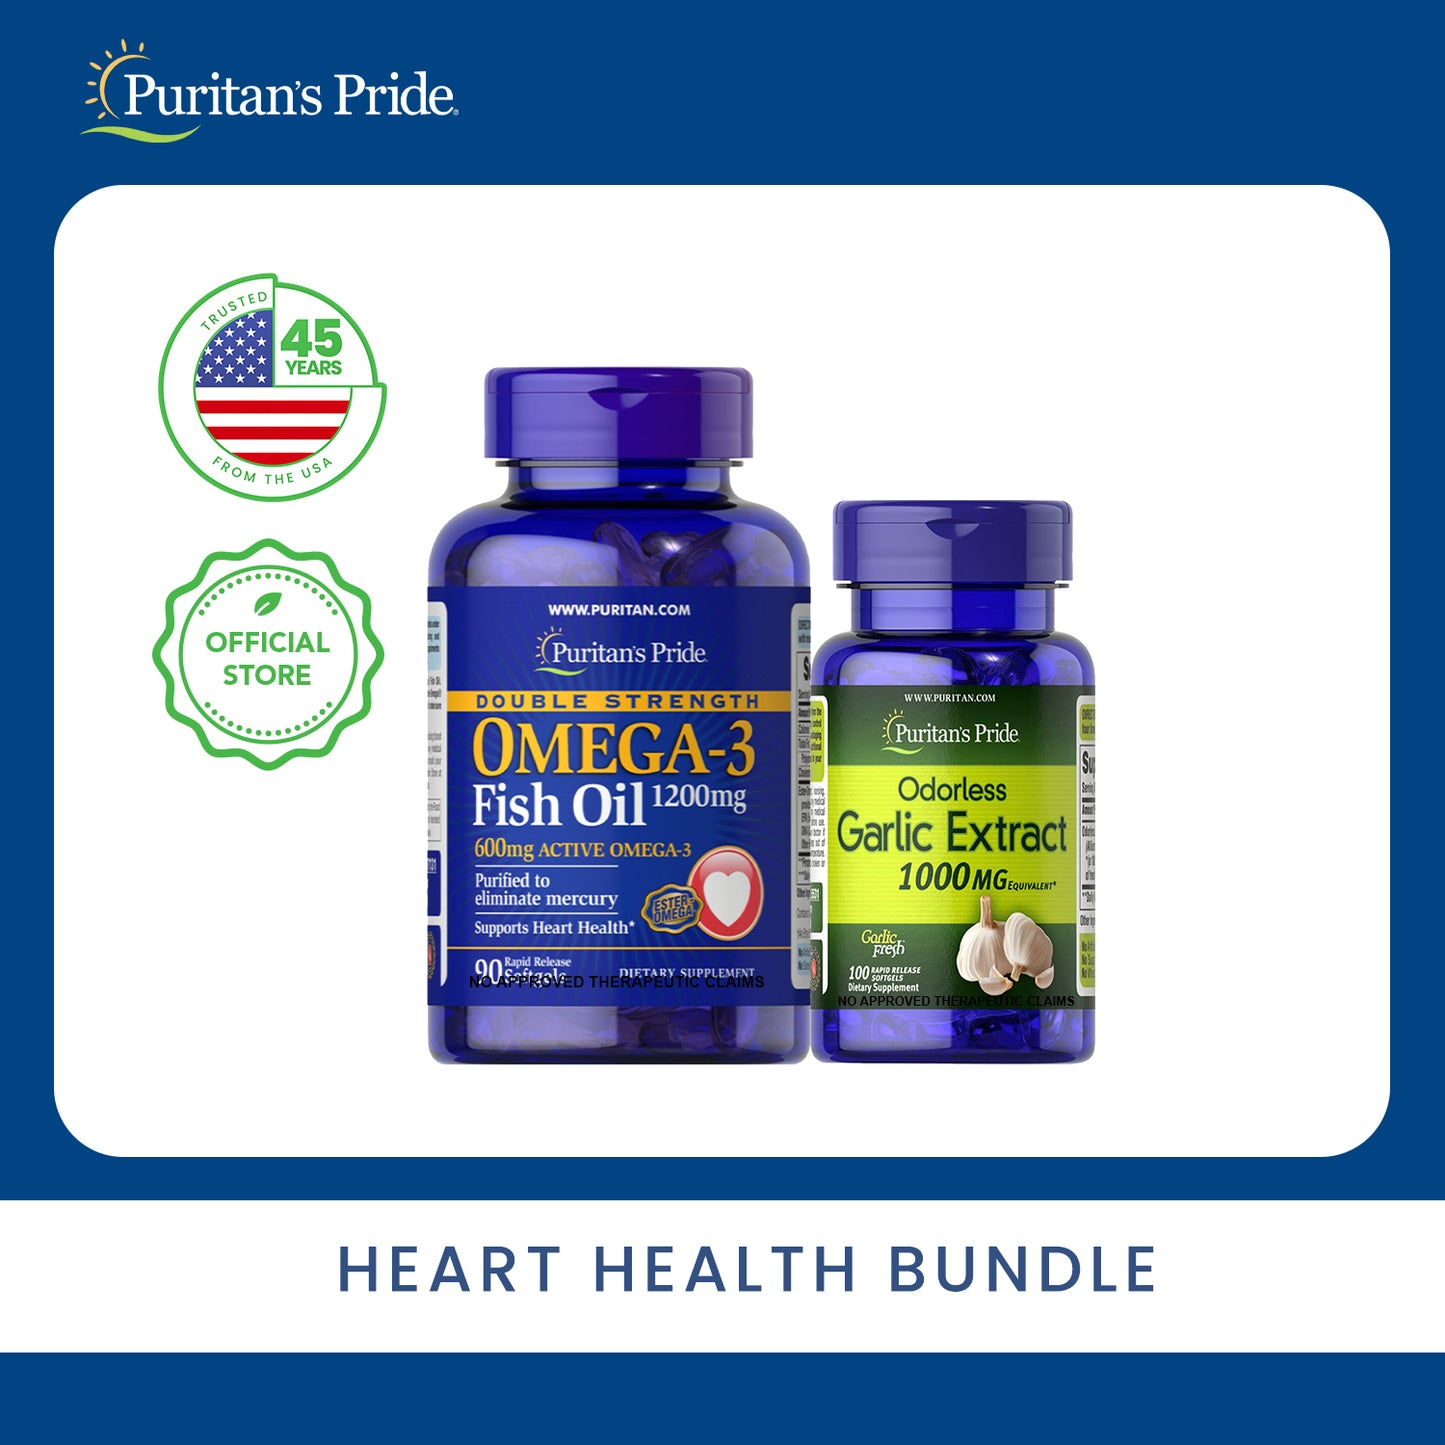 Heart Health Bundle Fish Oil Omega 3 Double Strength 1200mg + Odorless Garlic 1000mg 100 softgels Puritan's Pride Health Supplements